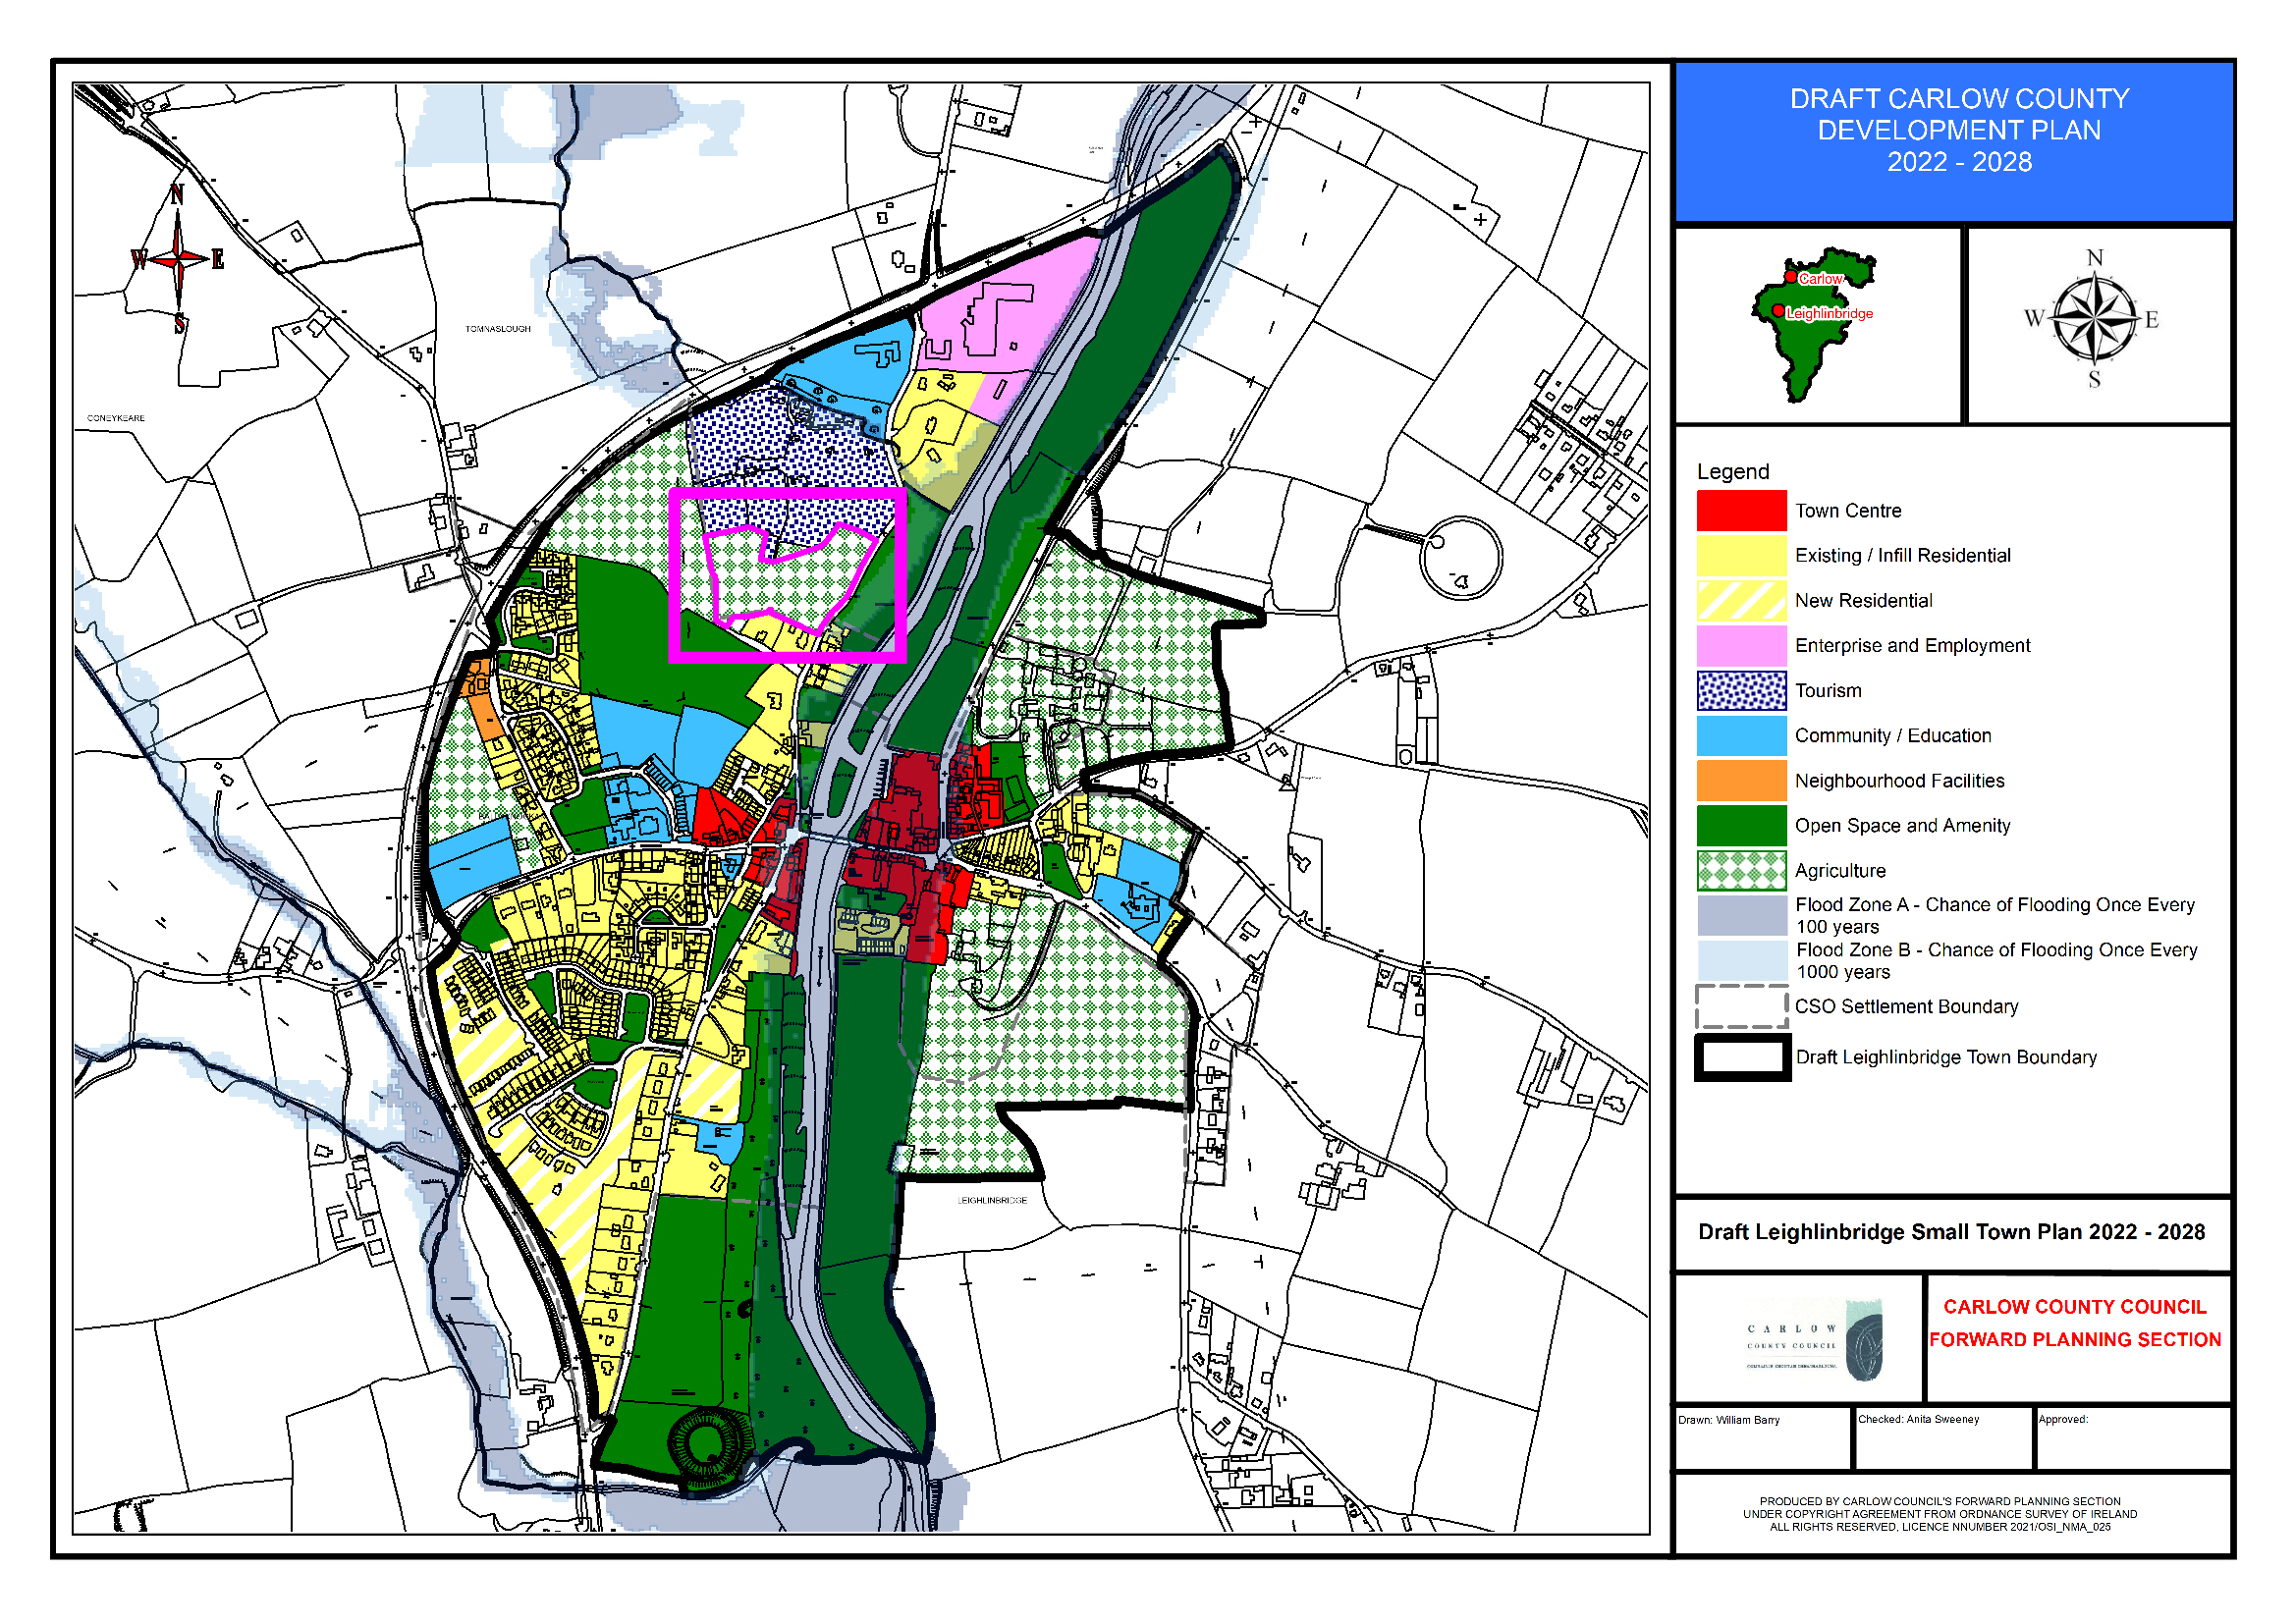 Draft Leighlinsbridge Small Town Plan 2022-2028